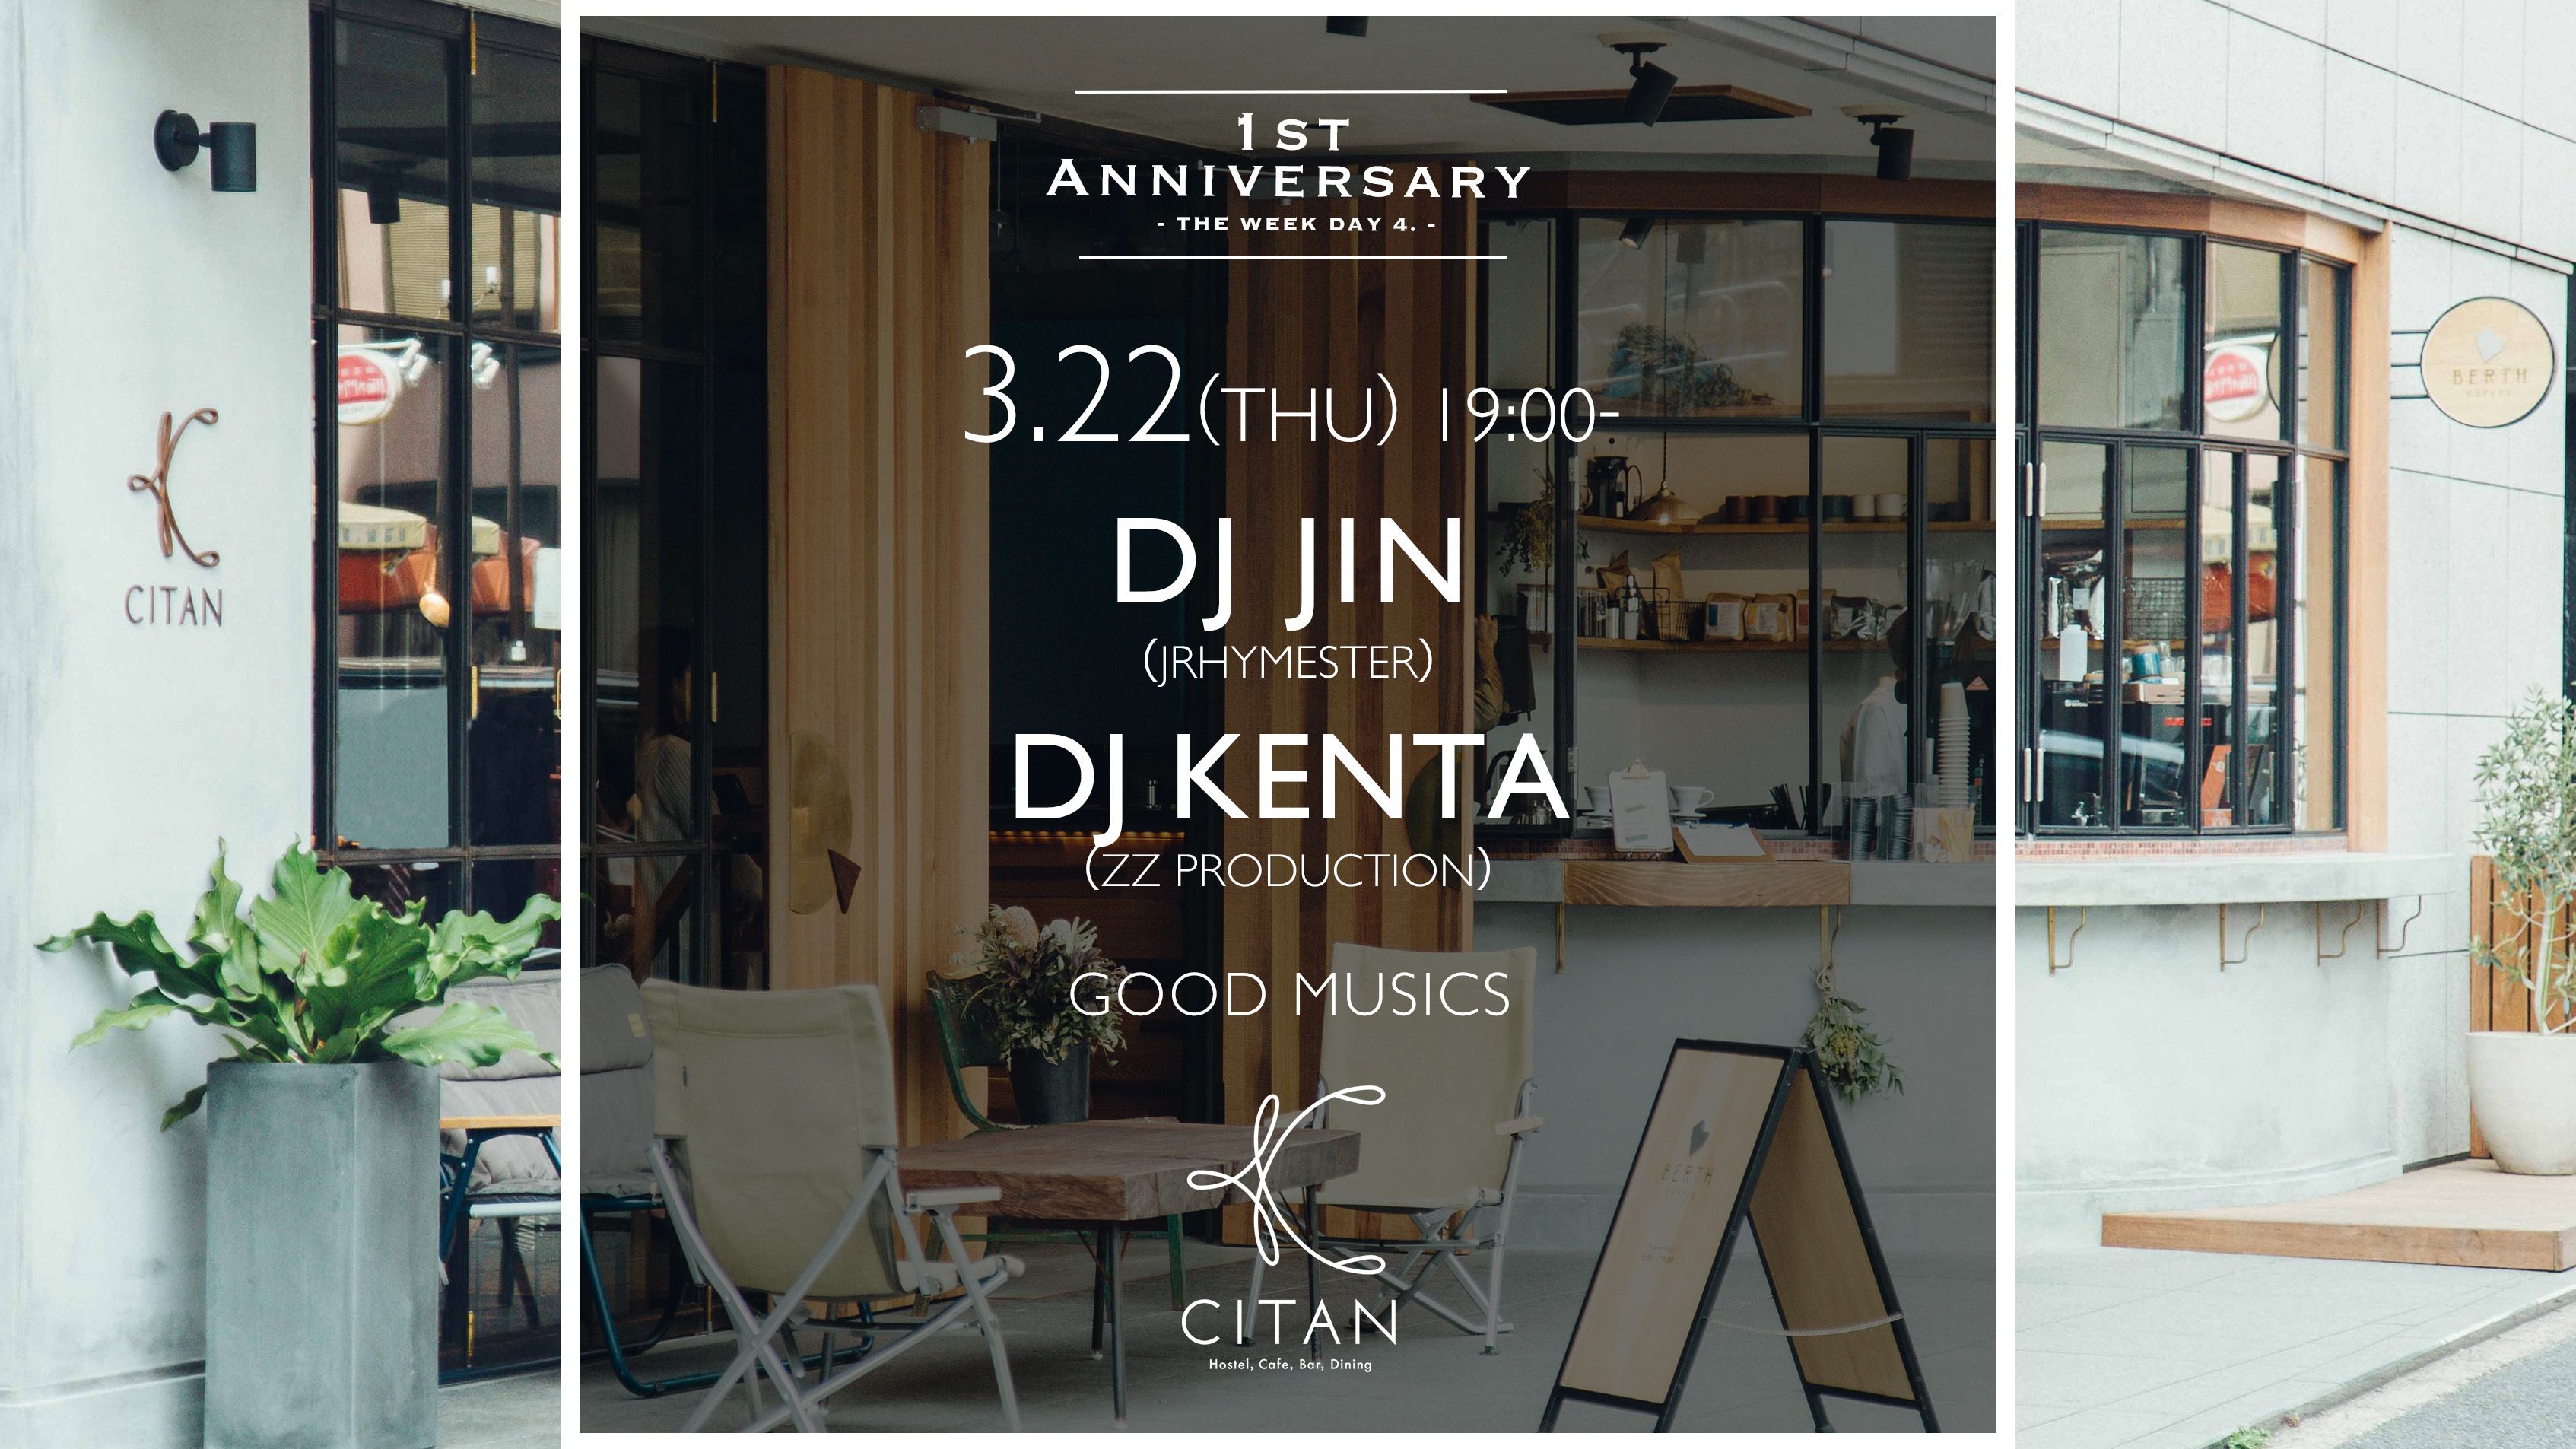 CITAN 1st Anniversary DAY 4